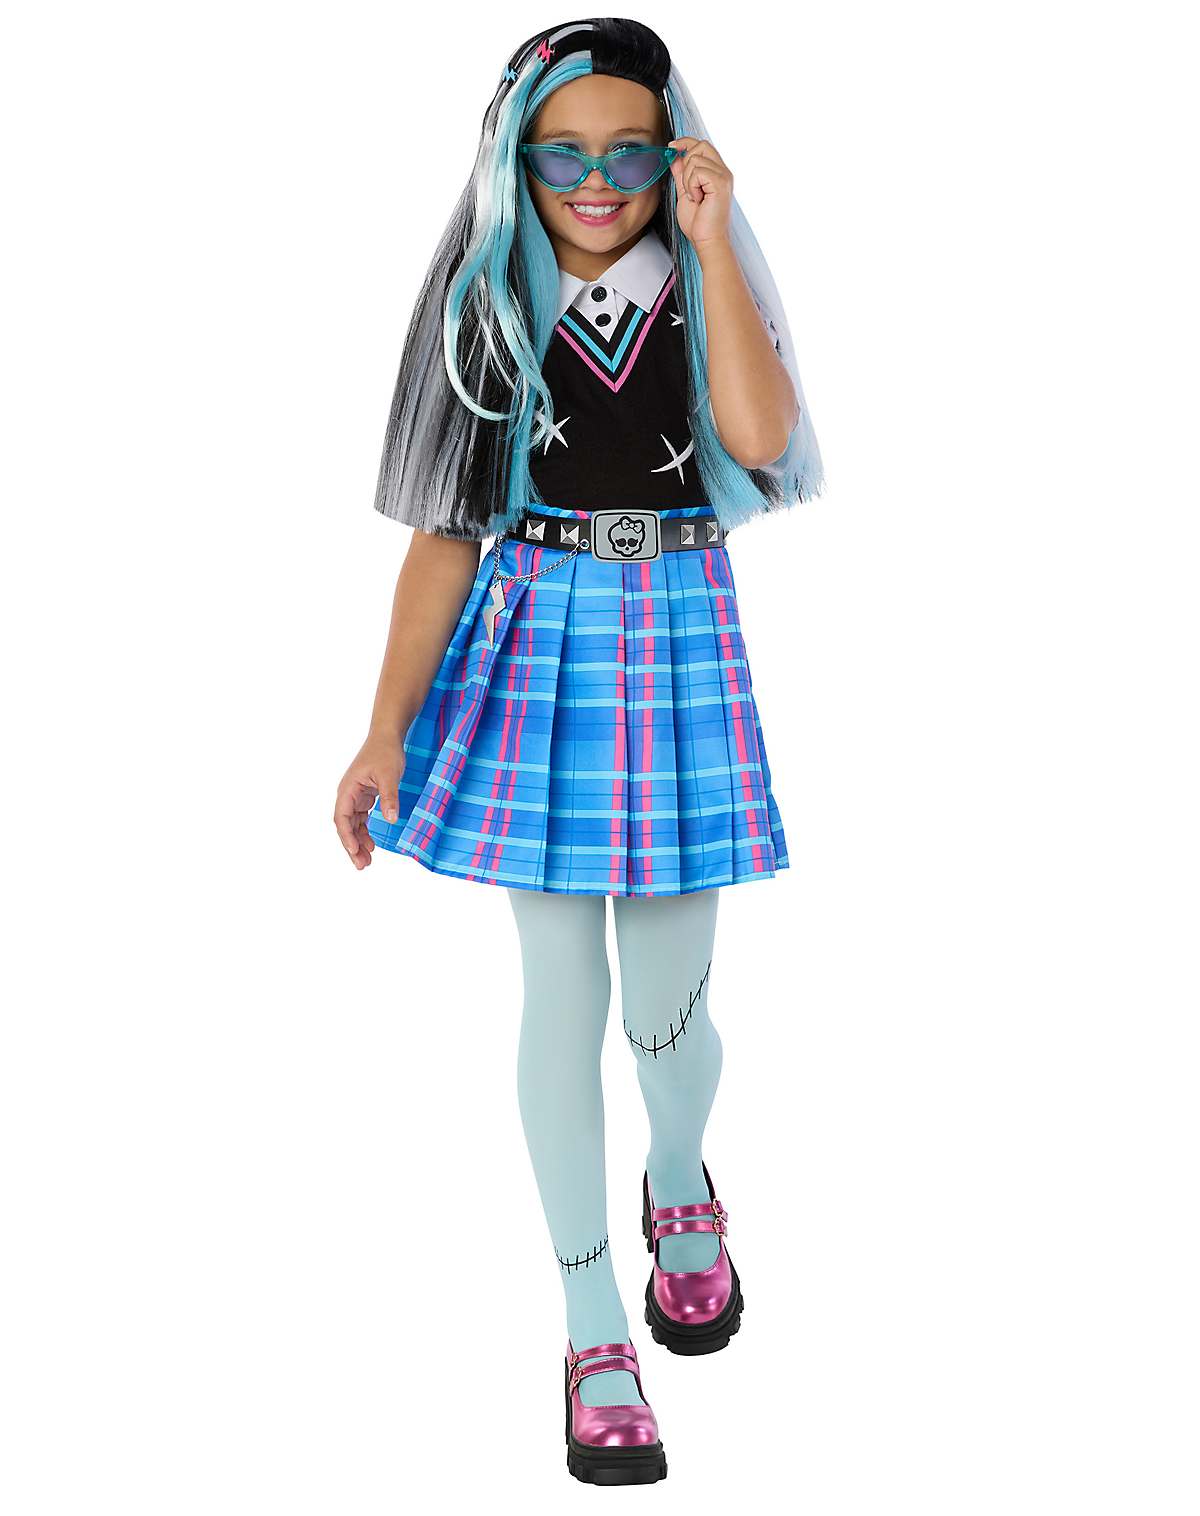 Kids Frankie Stein Costume - Monster High
